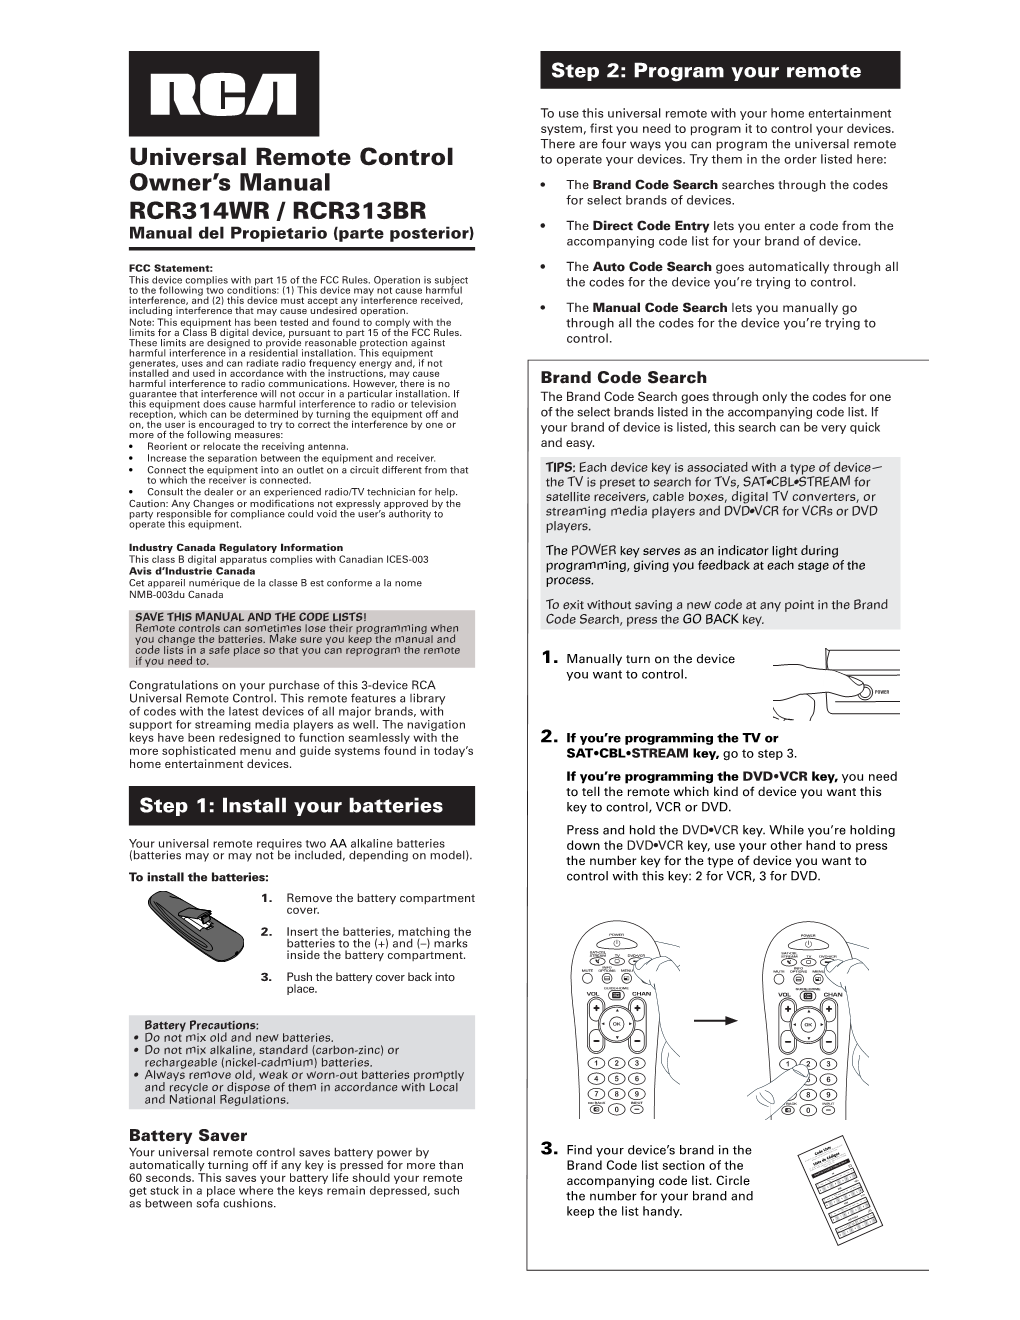 Universal Remote Control Owner's Manual RCR314WR / RCR313BR